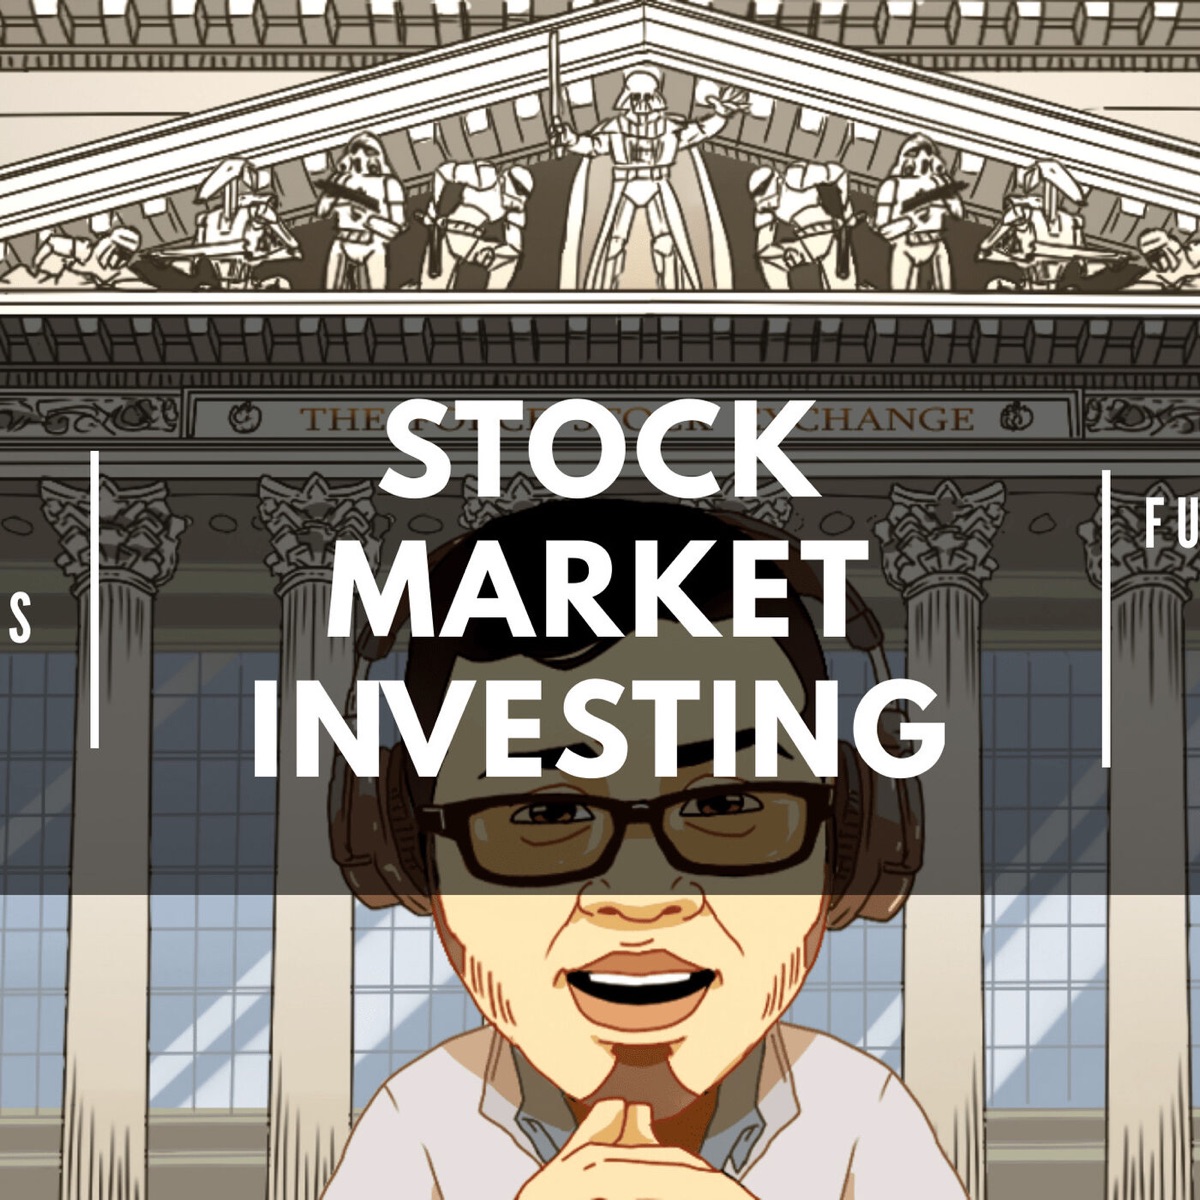 Intc stock price